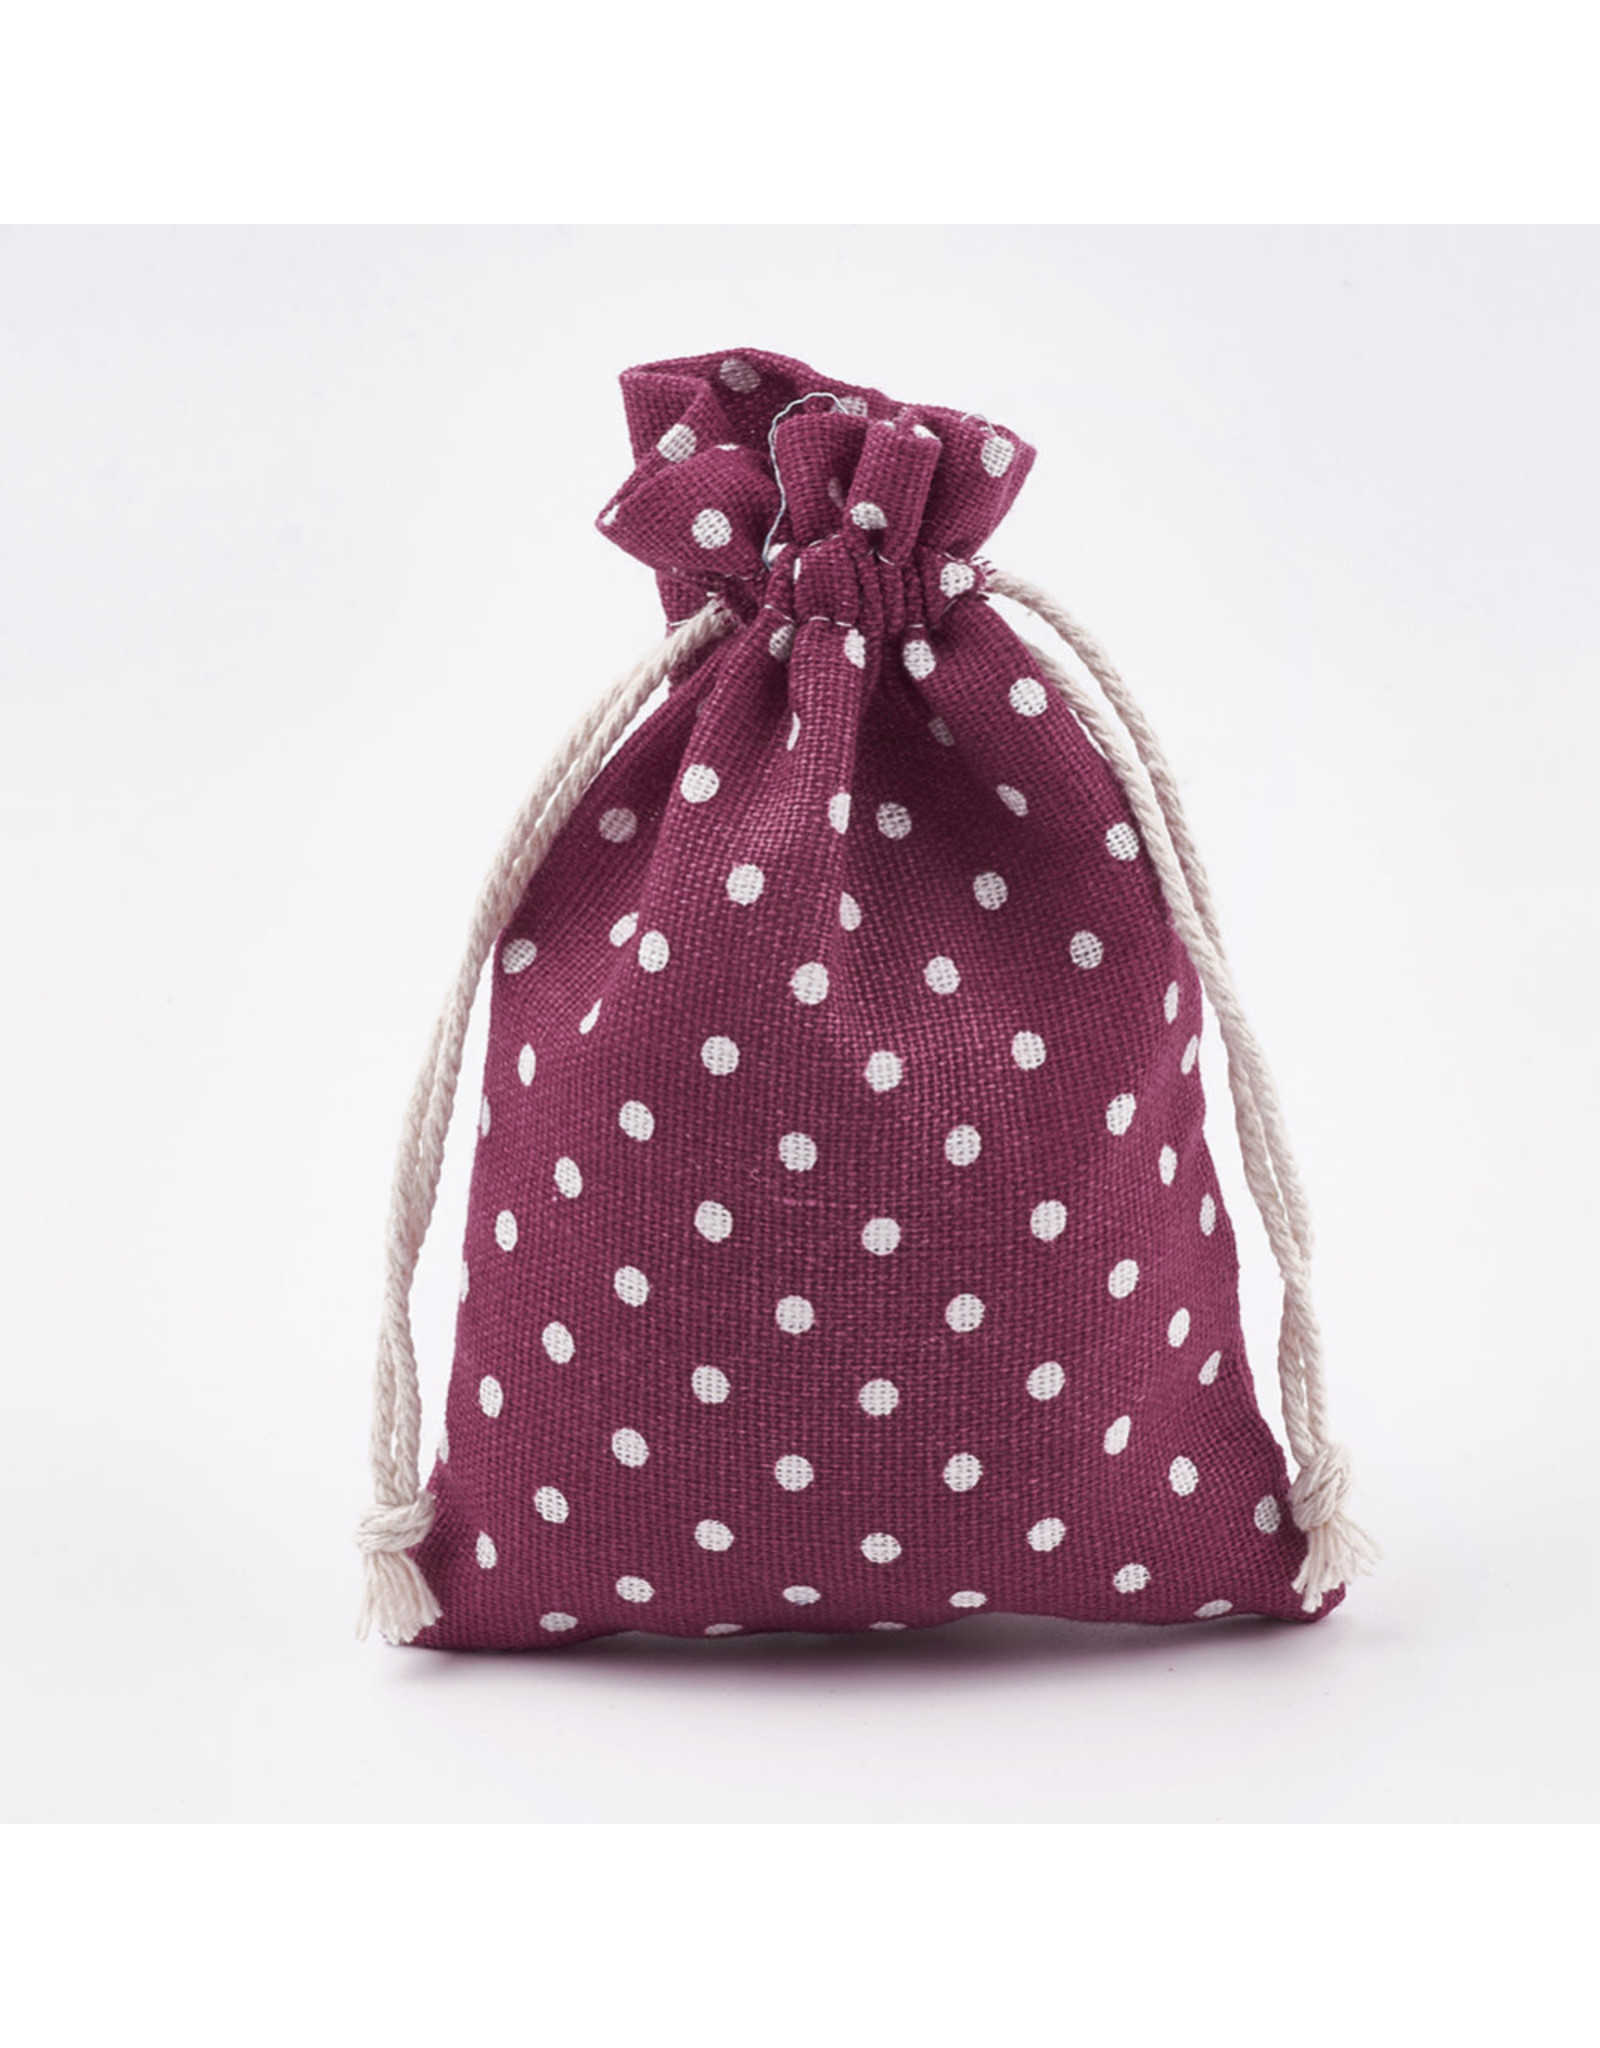 Gift Bag  Fuchsia Pink with Polka Dots  14x10cm  x5